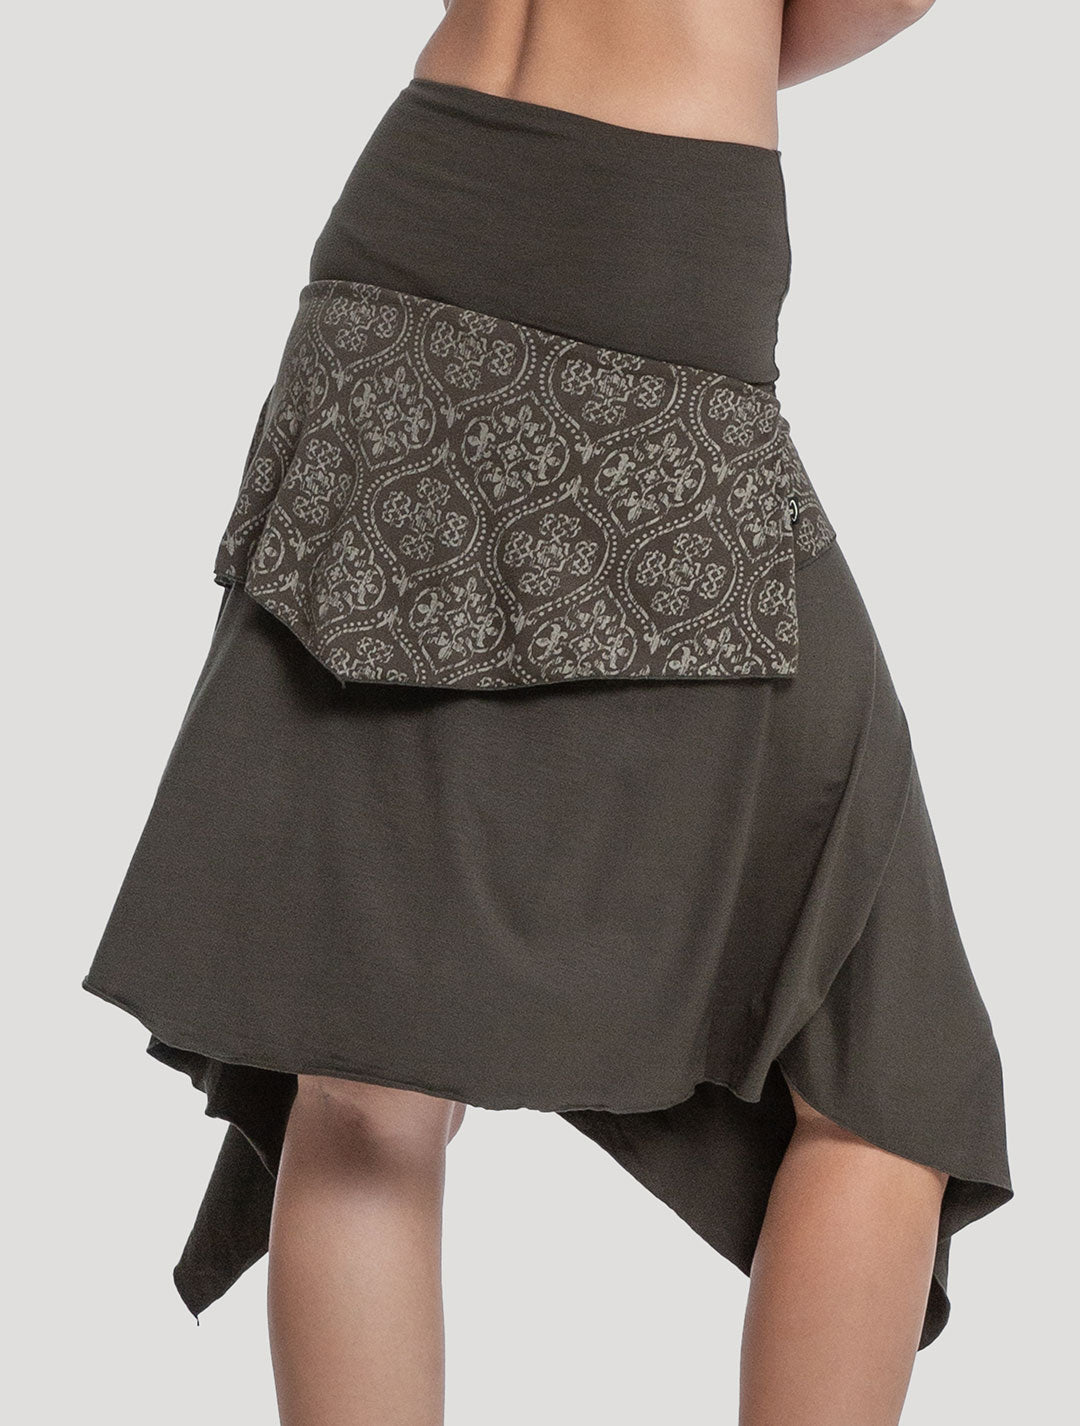 Olive Green 'Drag' Organic Cotton Asymmetric Midi Skirt by Psylo Fashion